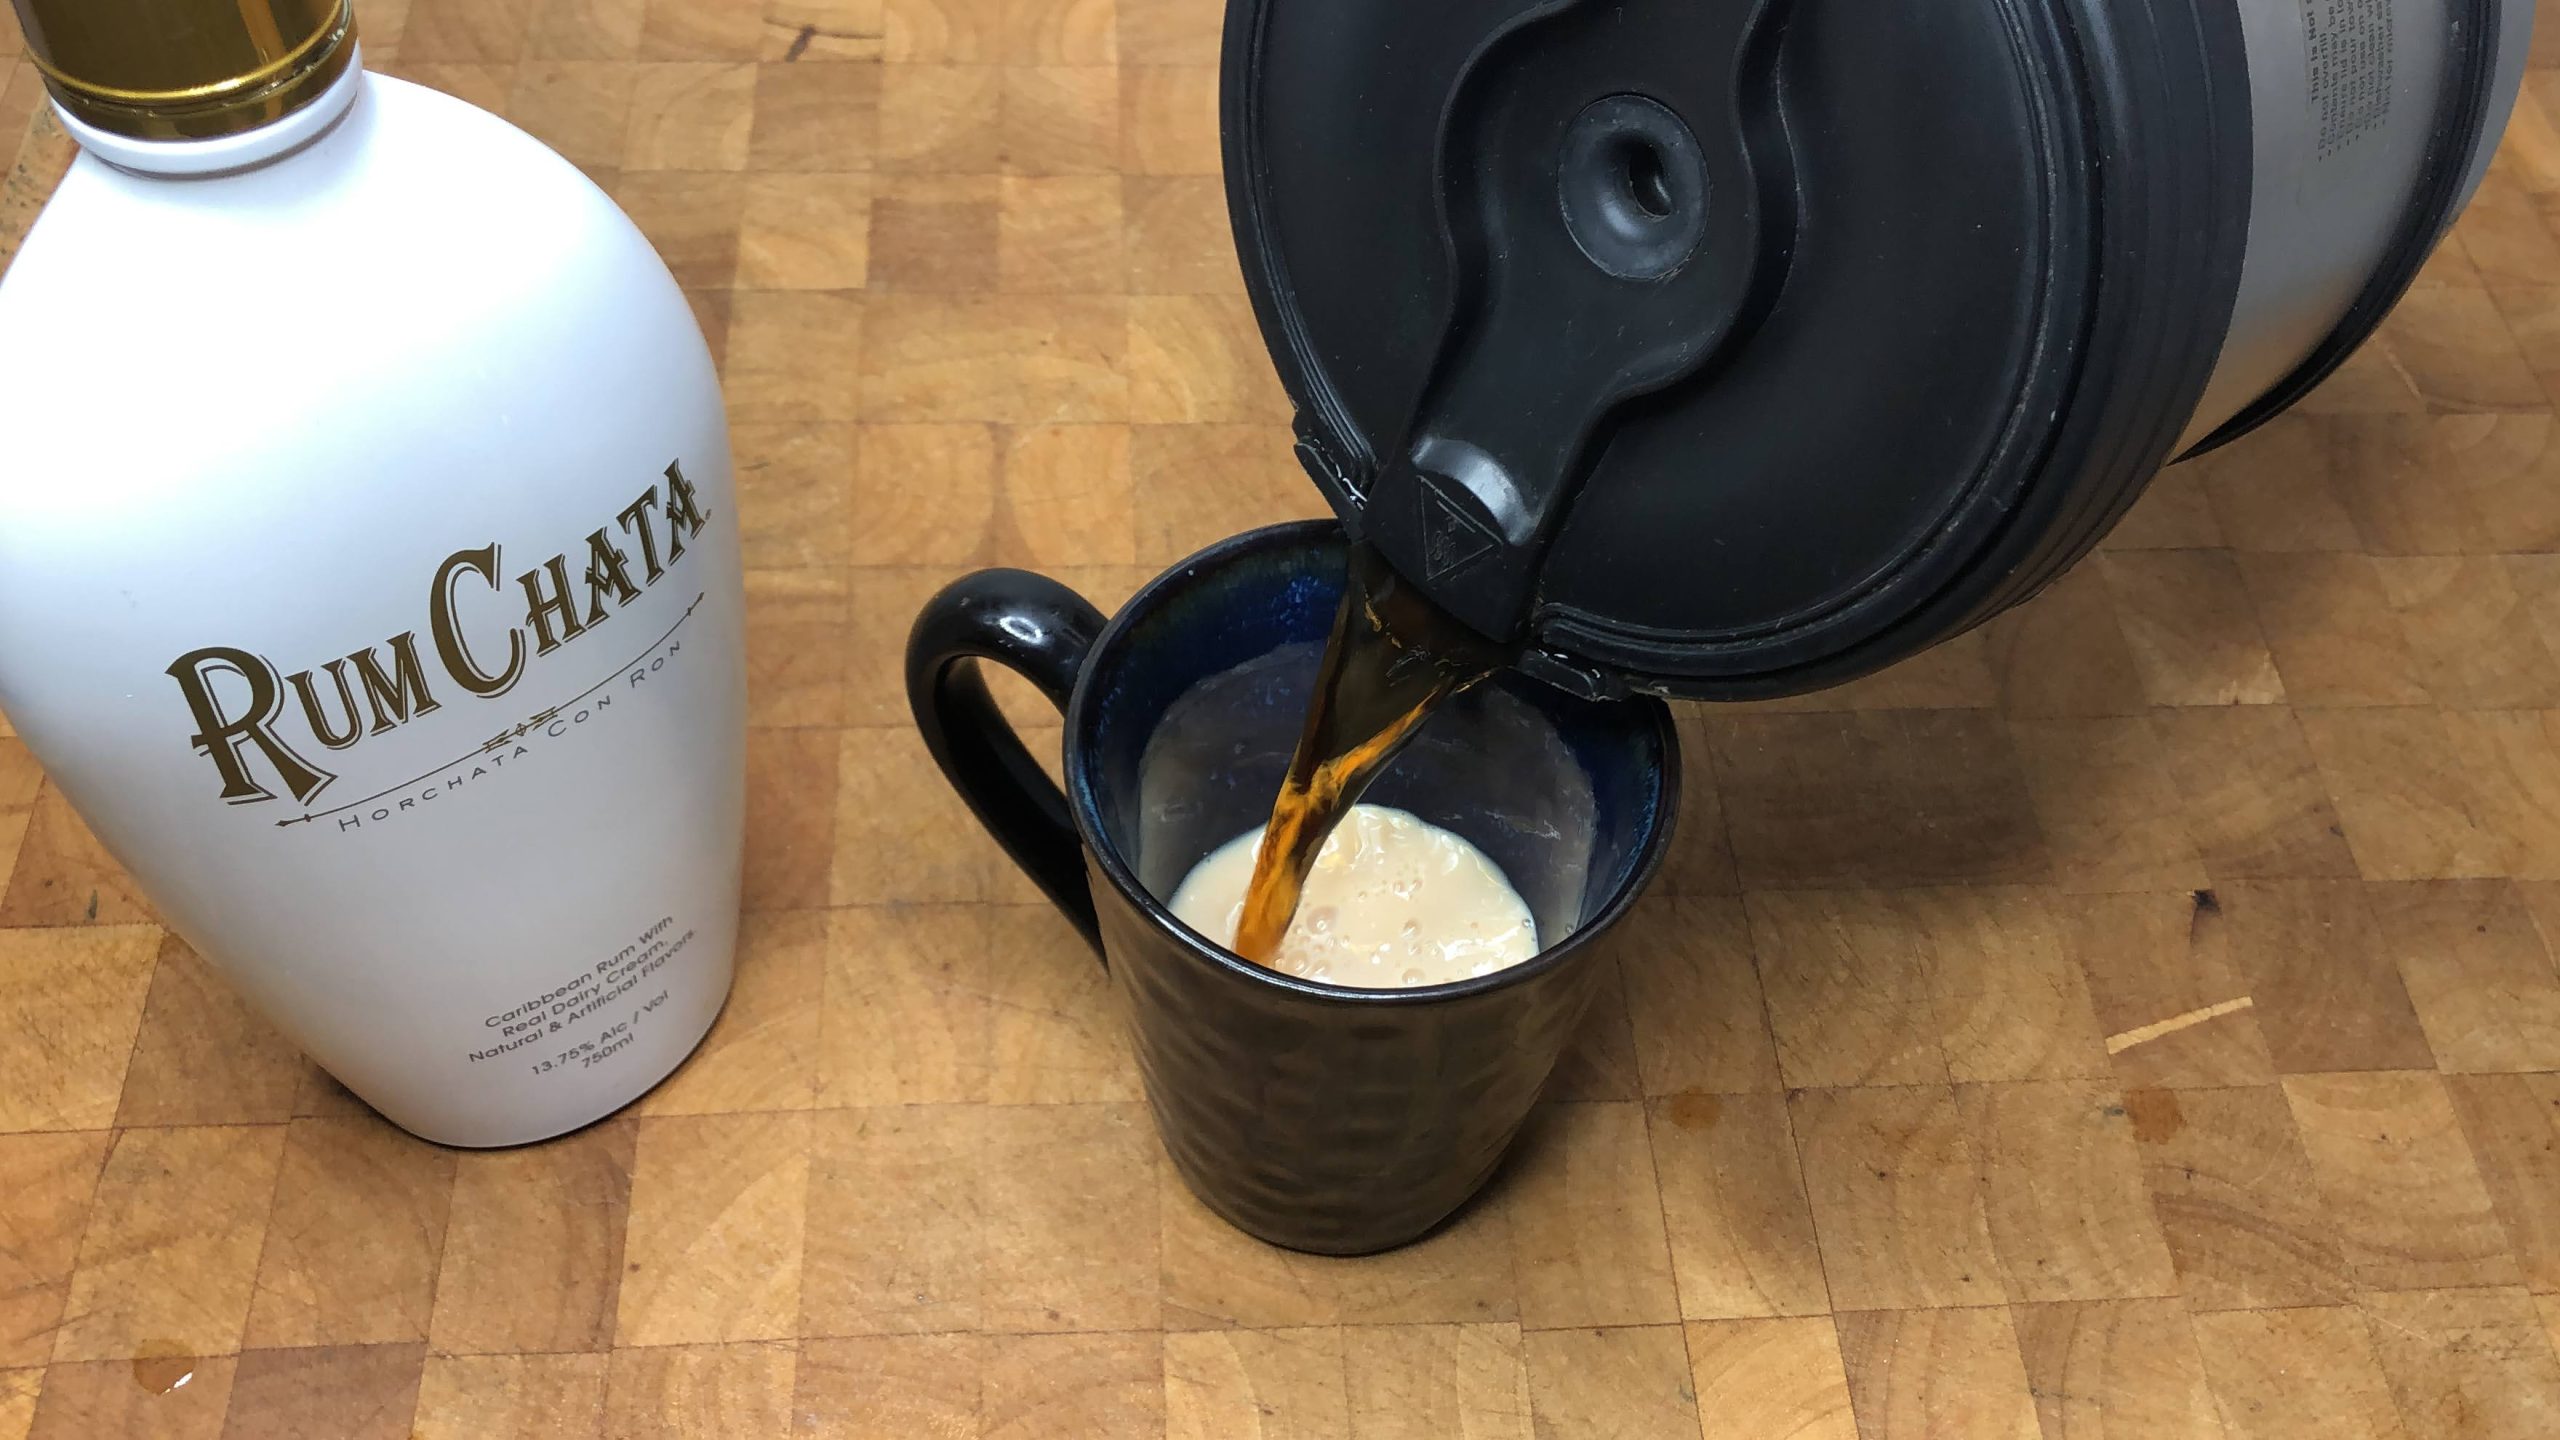 pouring coffee into a coffee mug